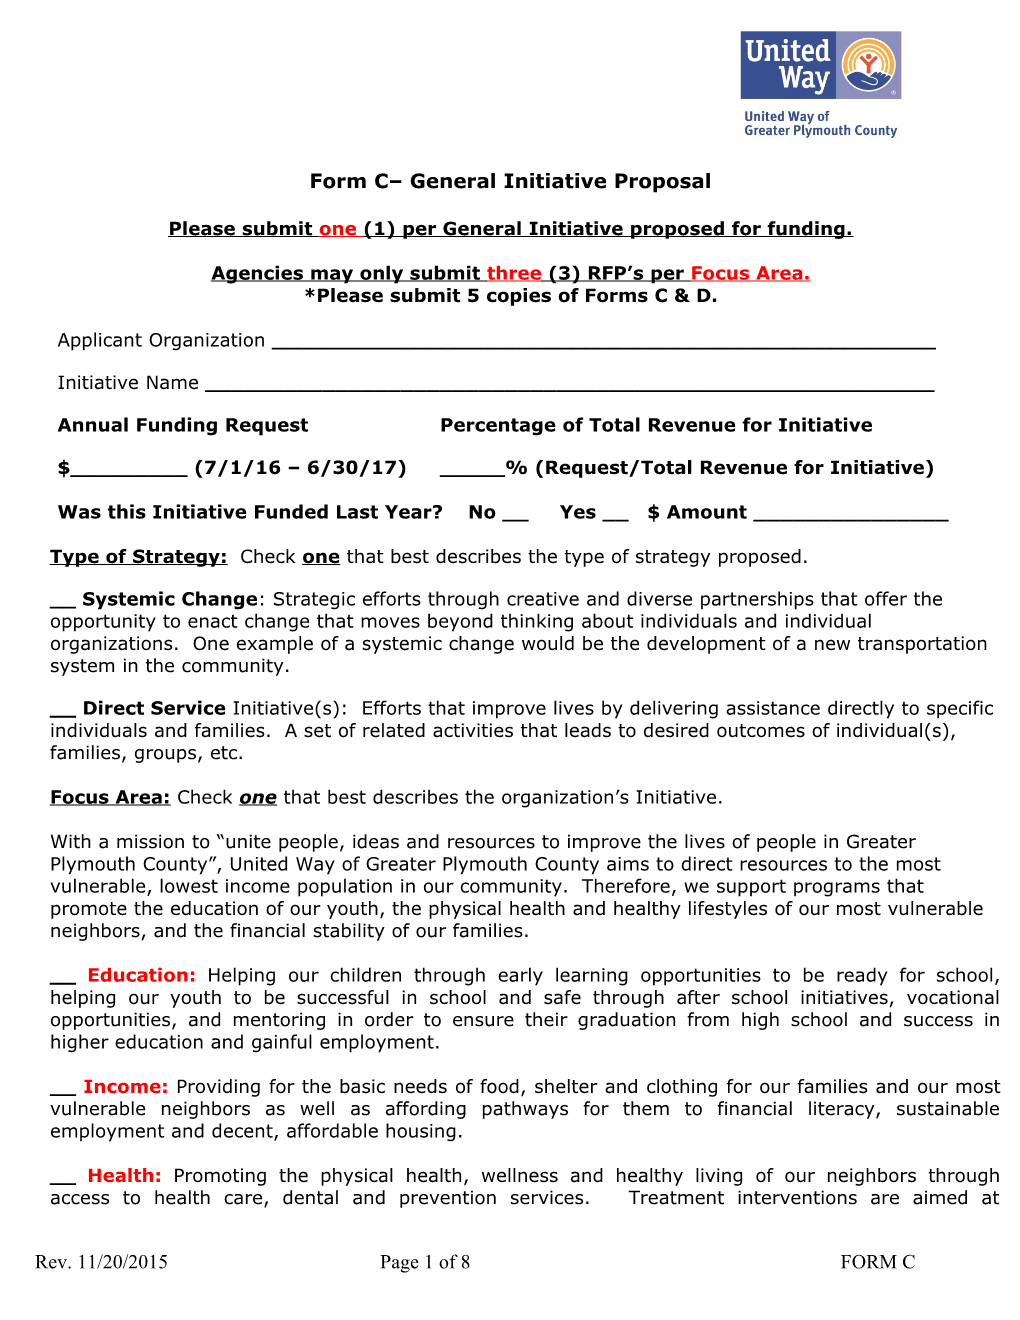 Form C General Initiative Proposal